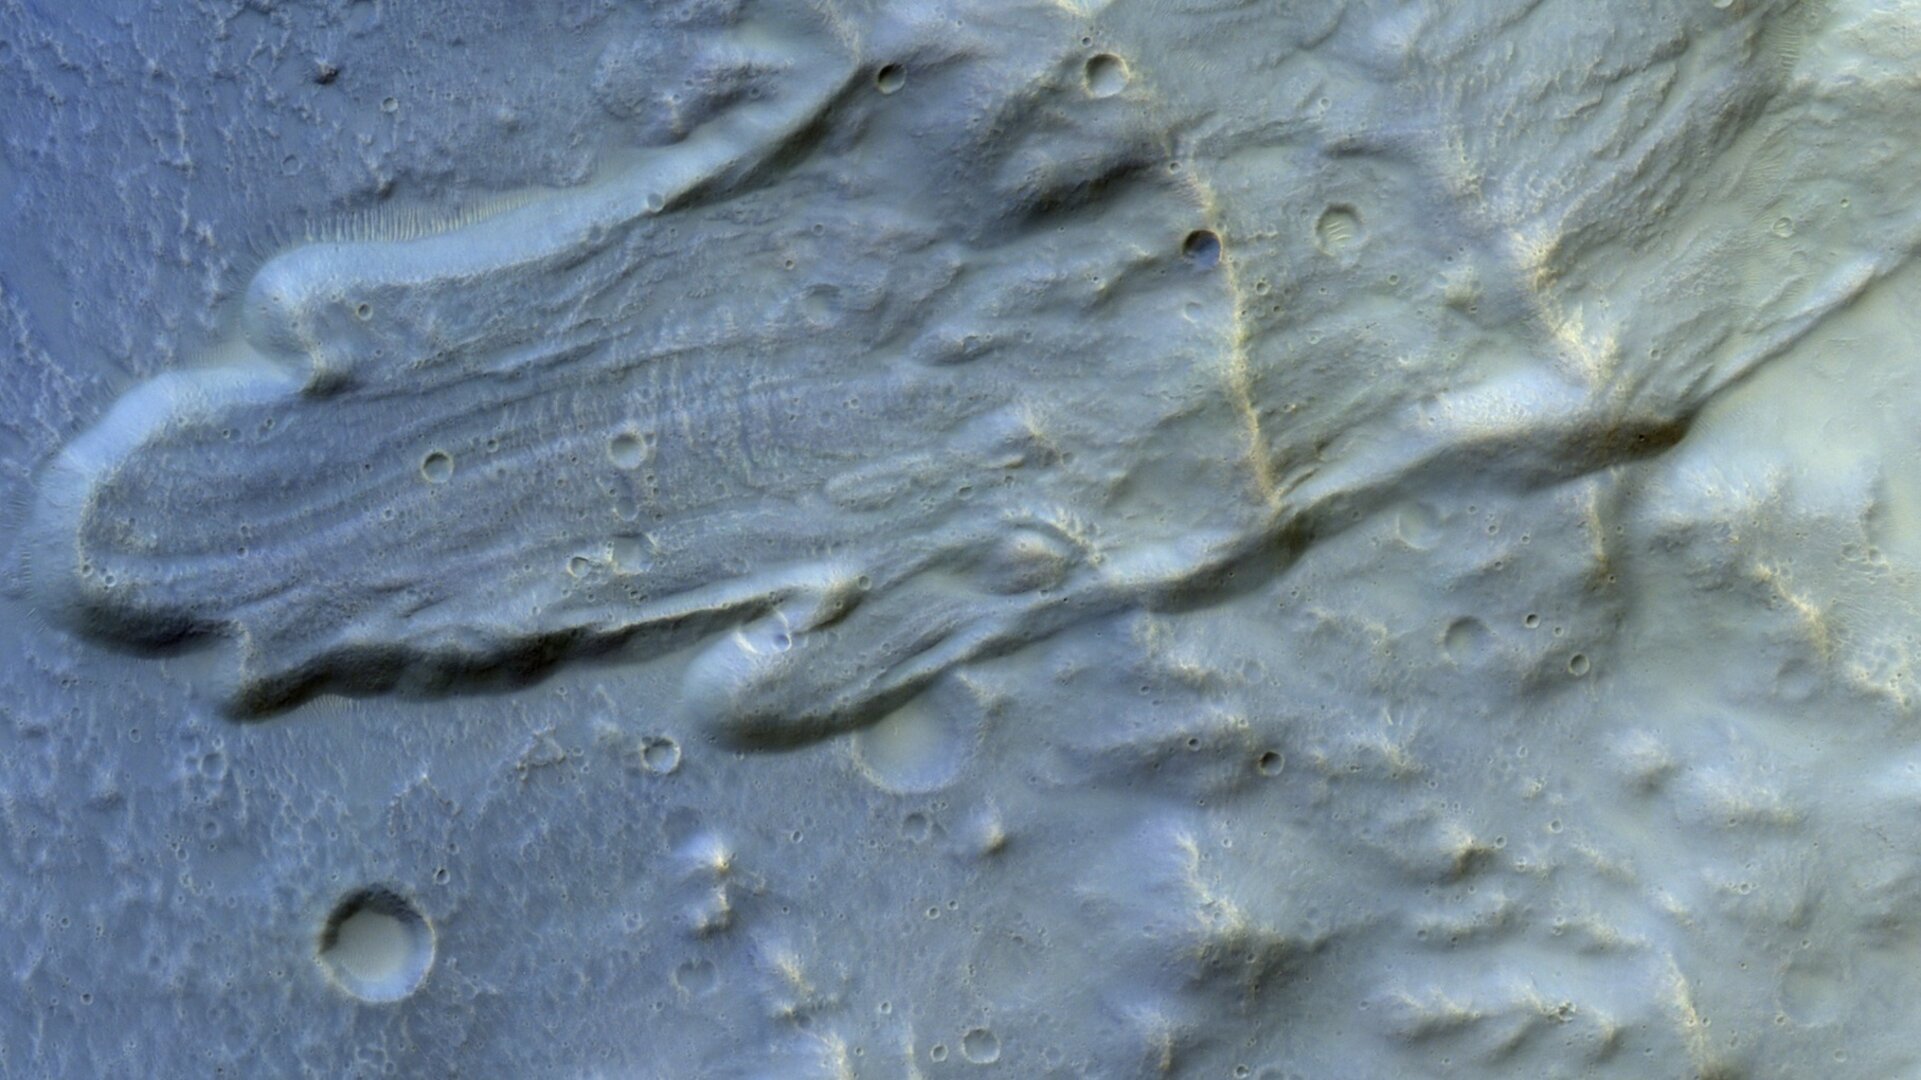 LANDSLIDE IN ZUNIL CRATER ON MARS 8x10 PHOTO NASA